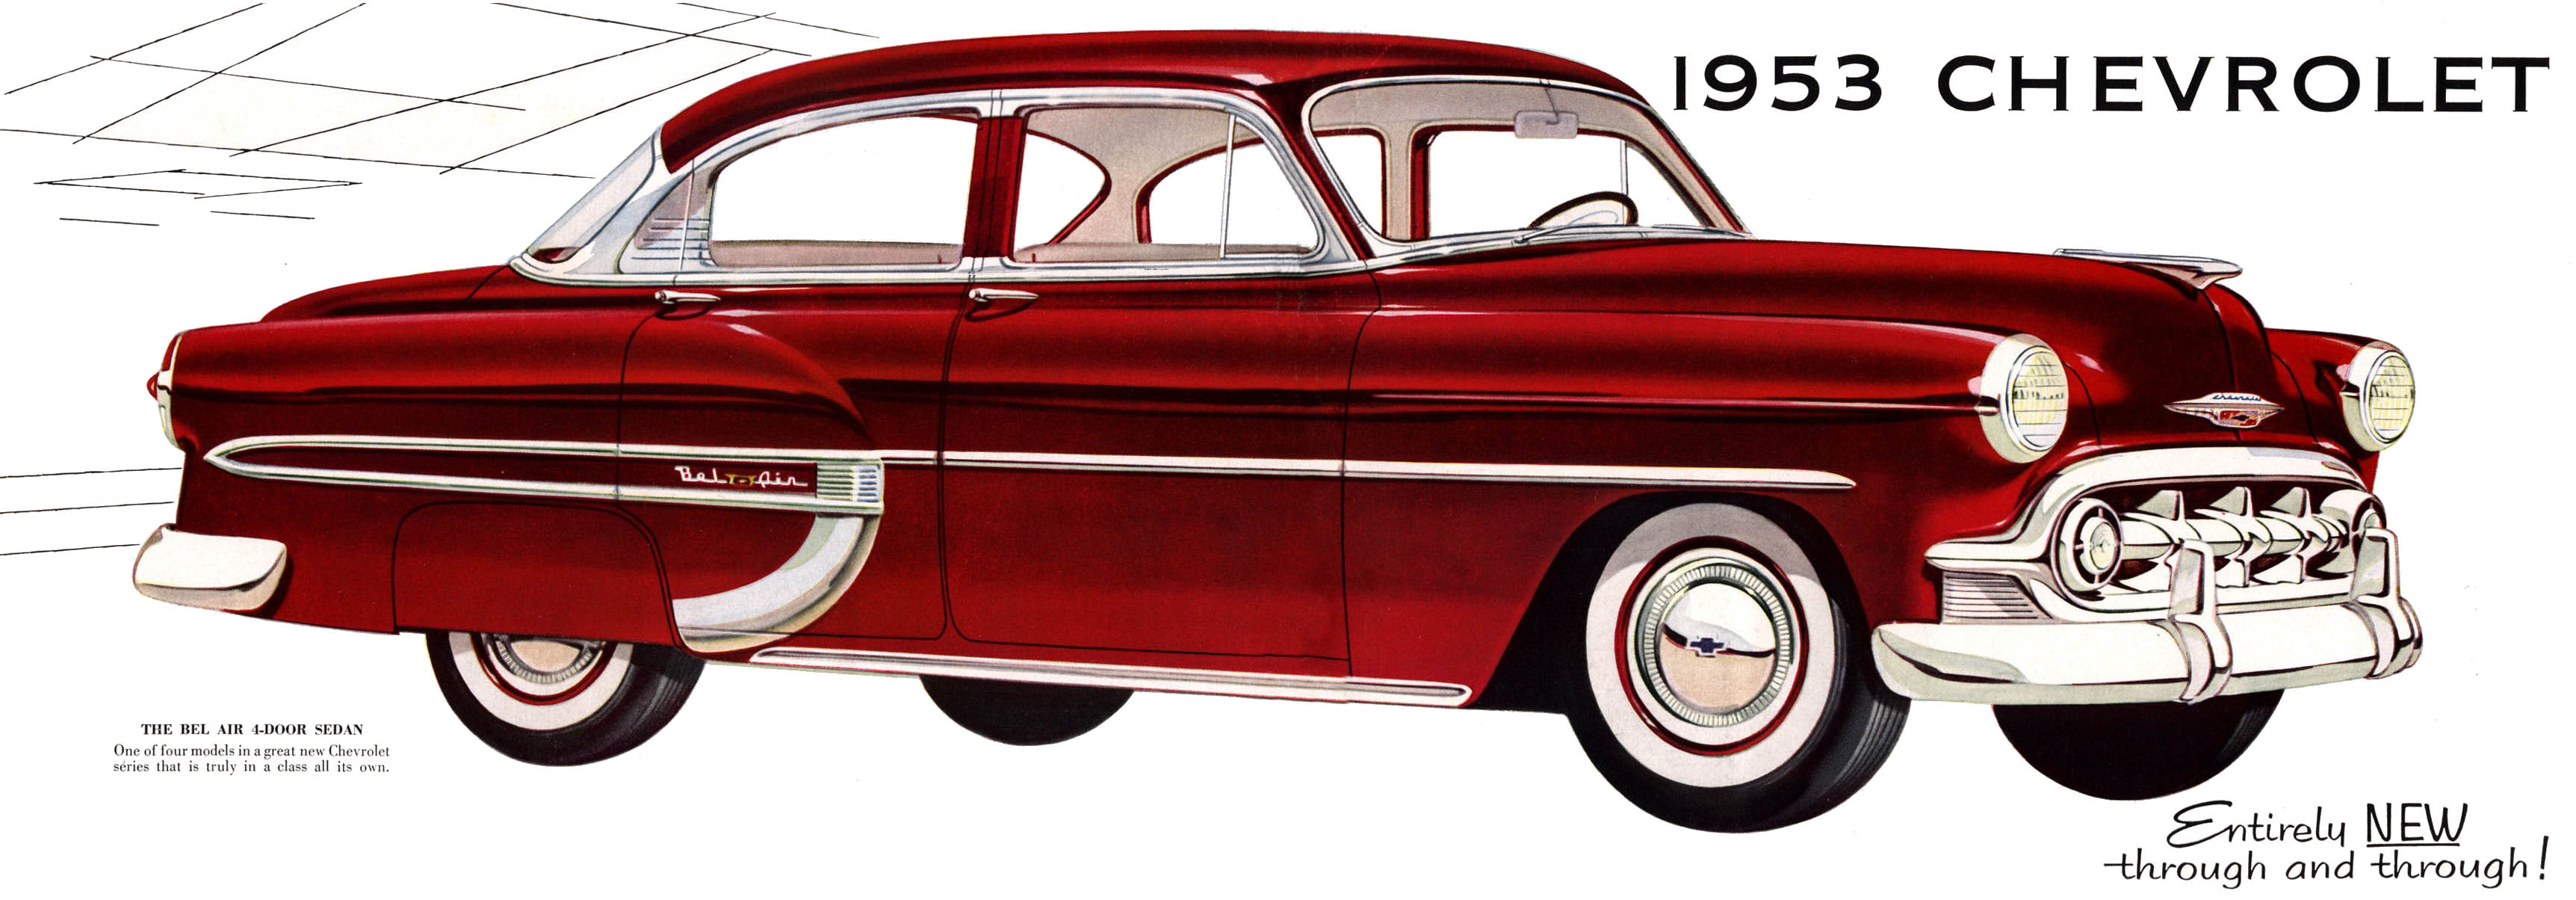 1953 Chevrolet-01